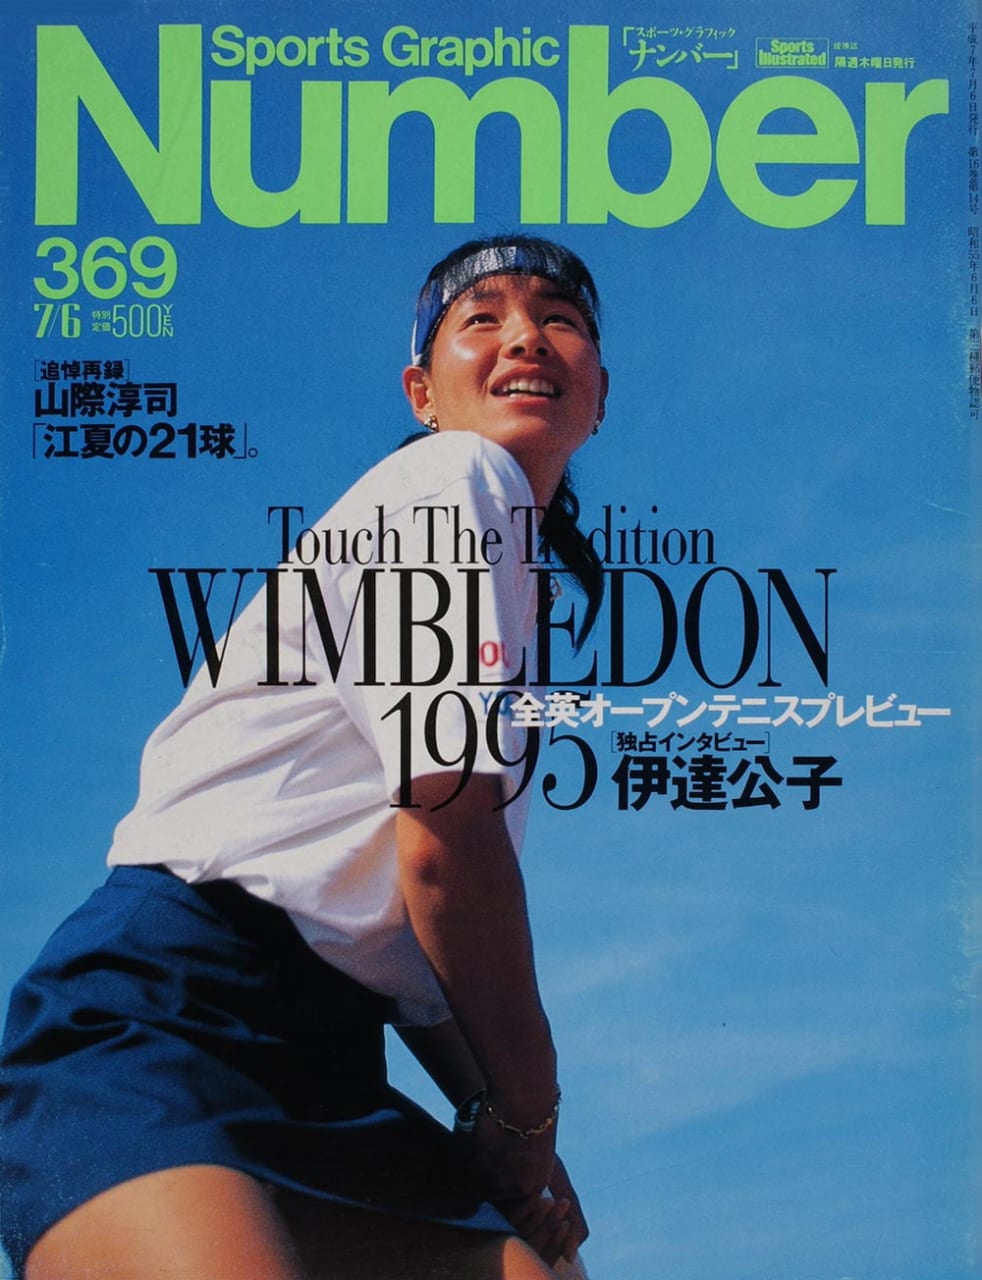 Sports Graphic Number 369号
1995年6月22日発売
表紙撮影：田沼武男